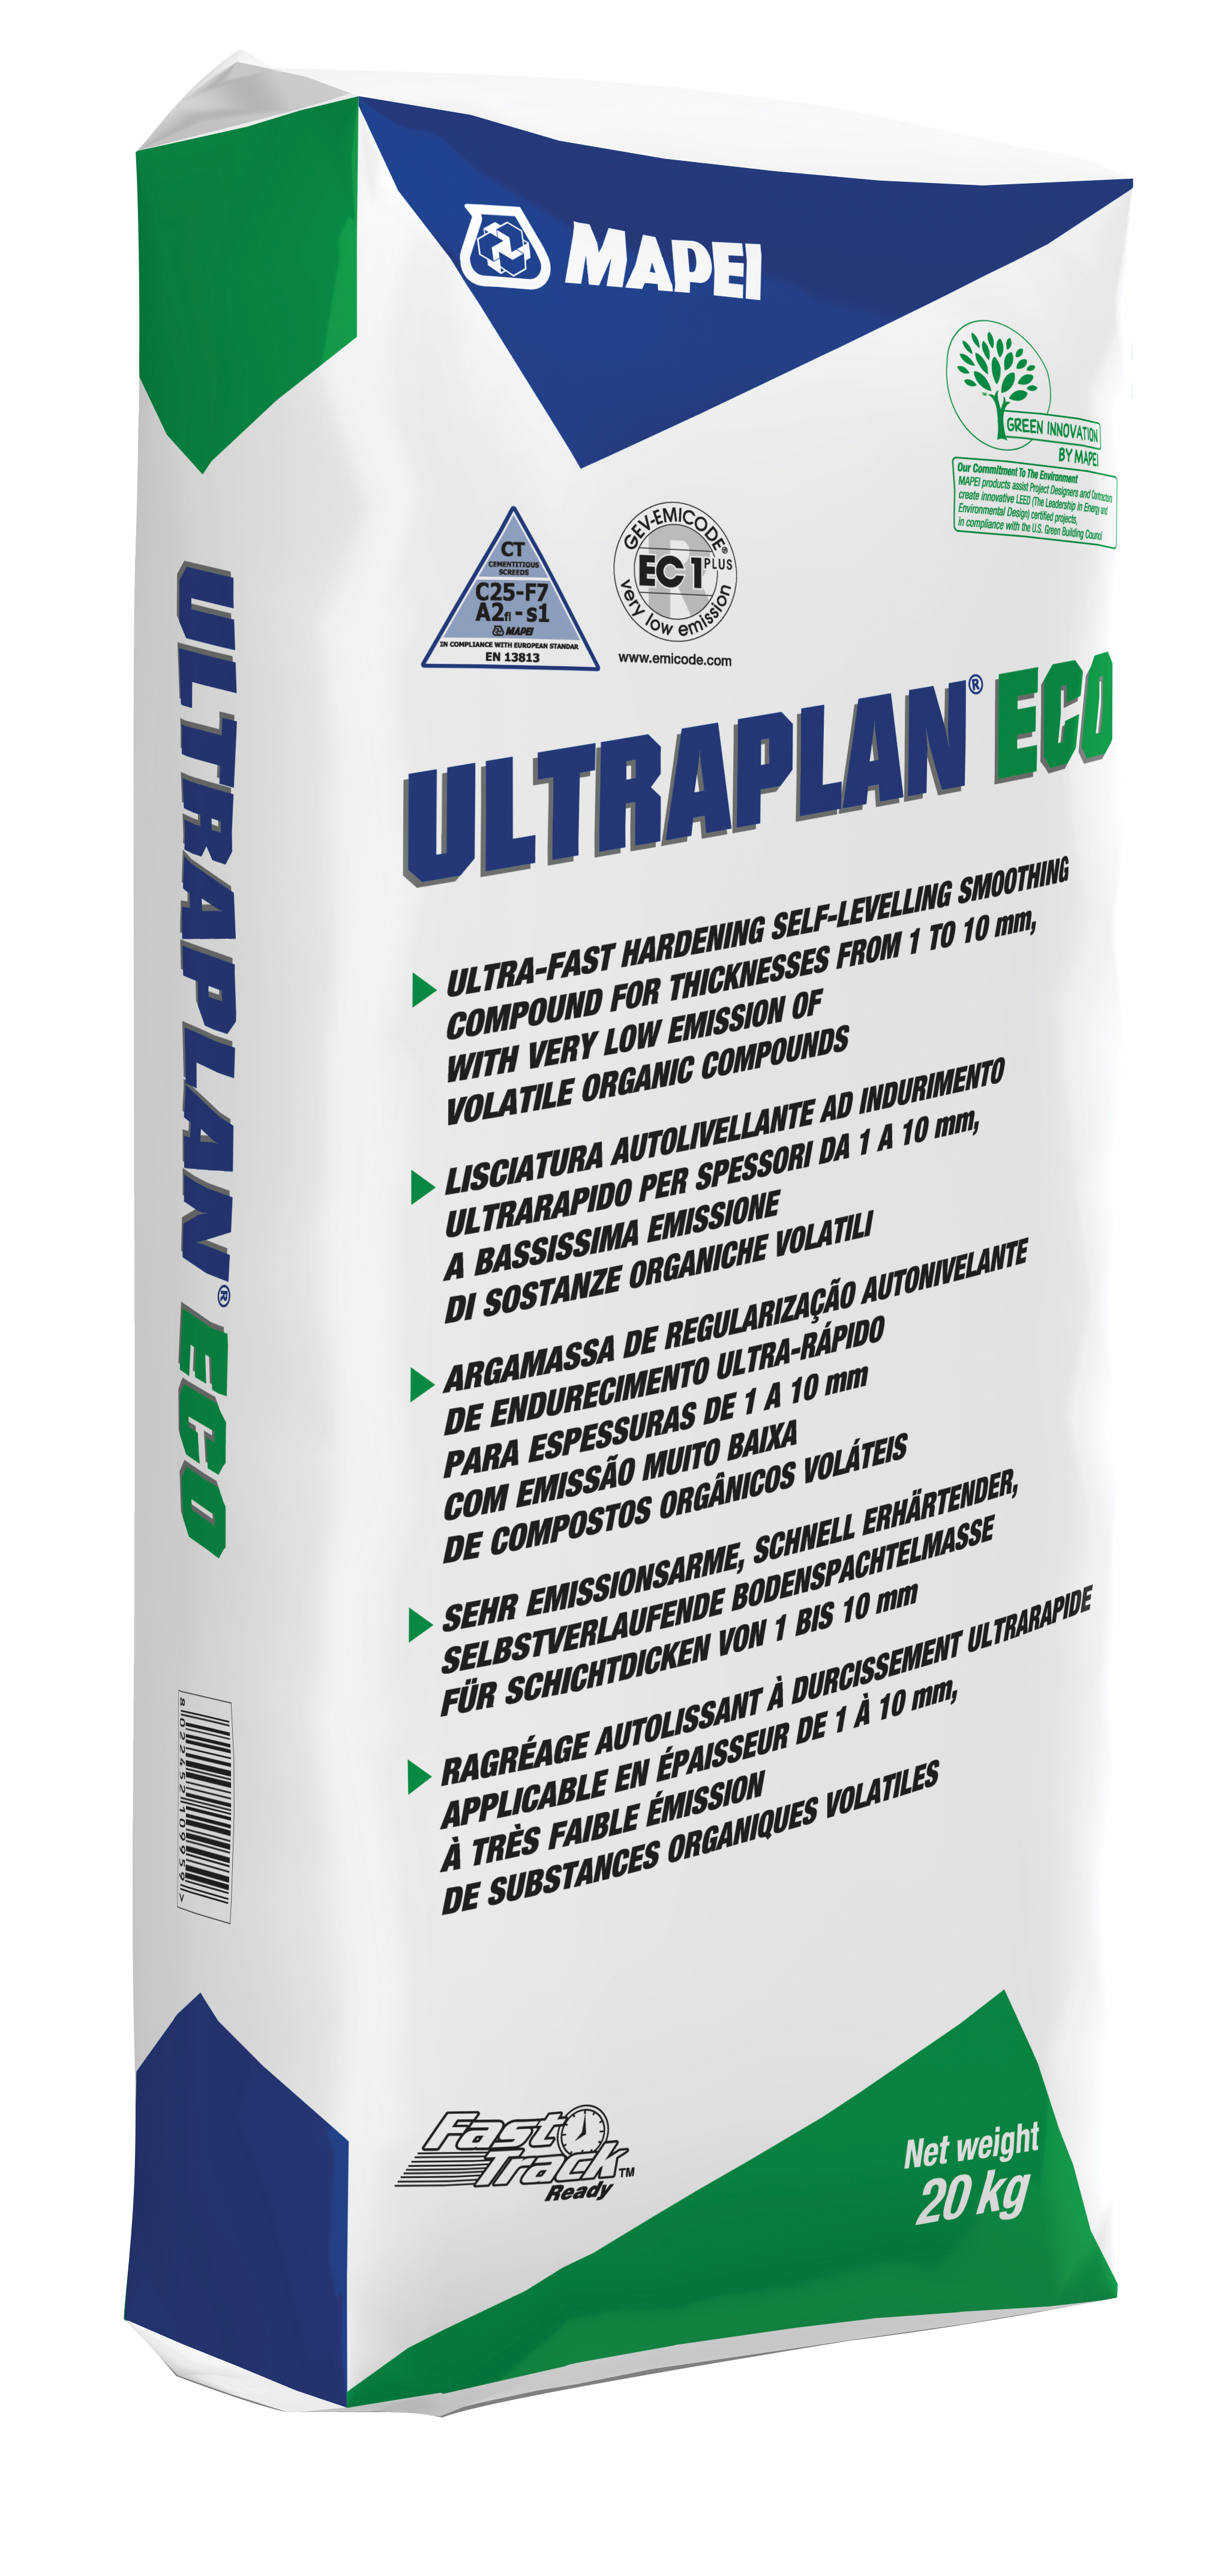 Ultraplan M20 Plus, technical sheet